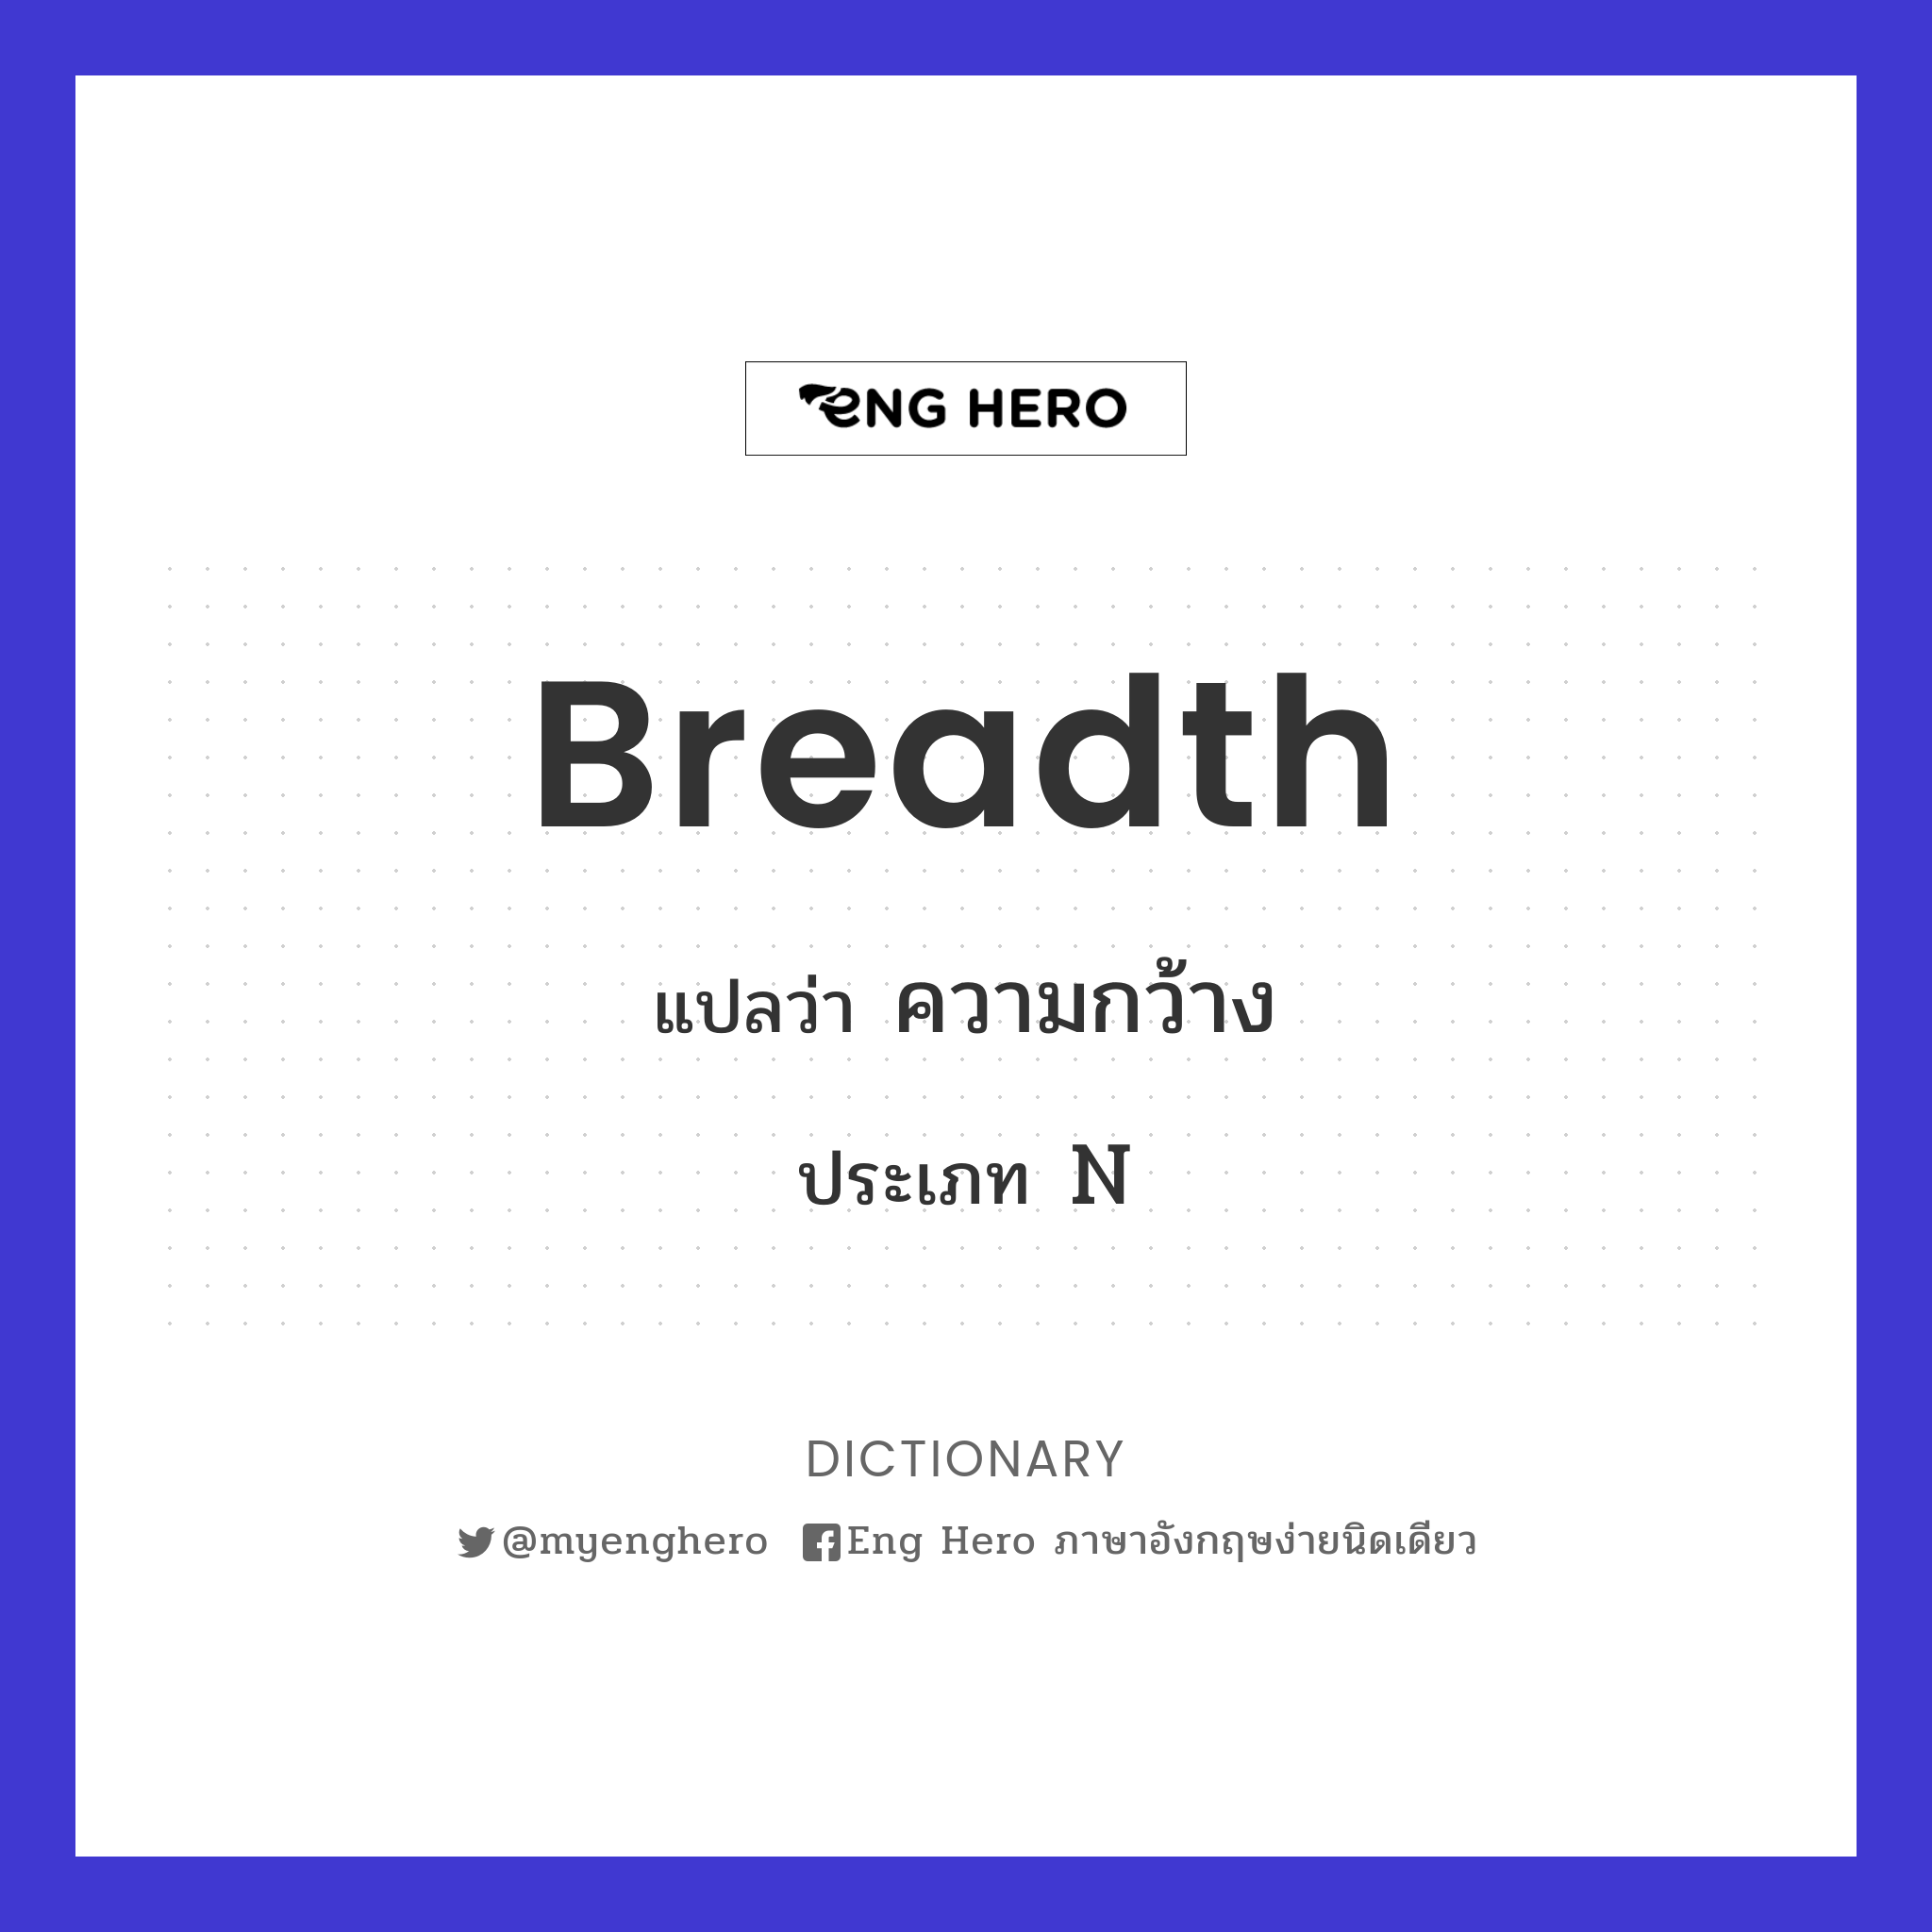 breadth